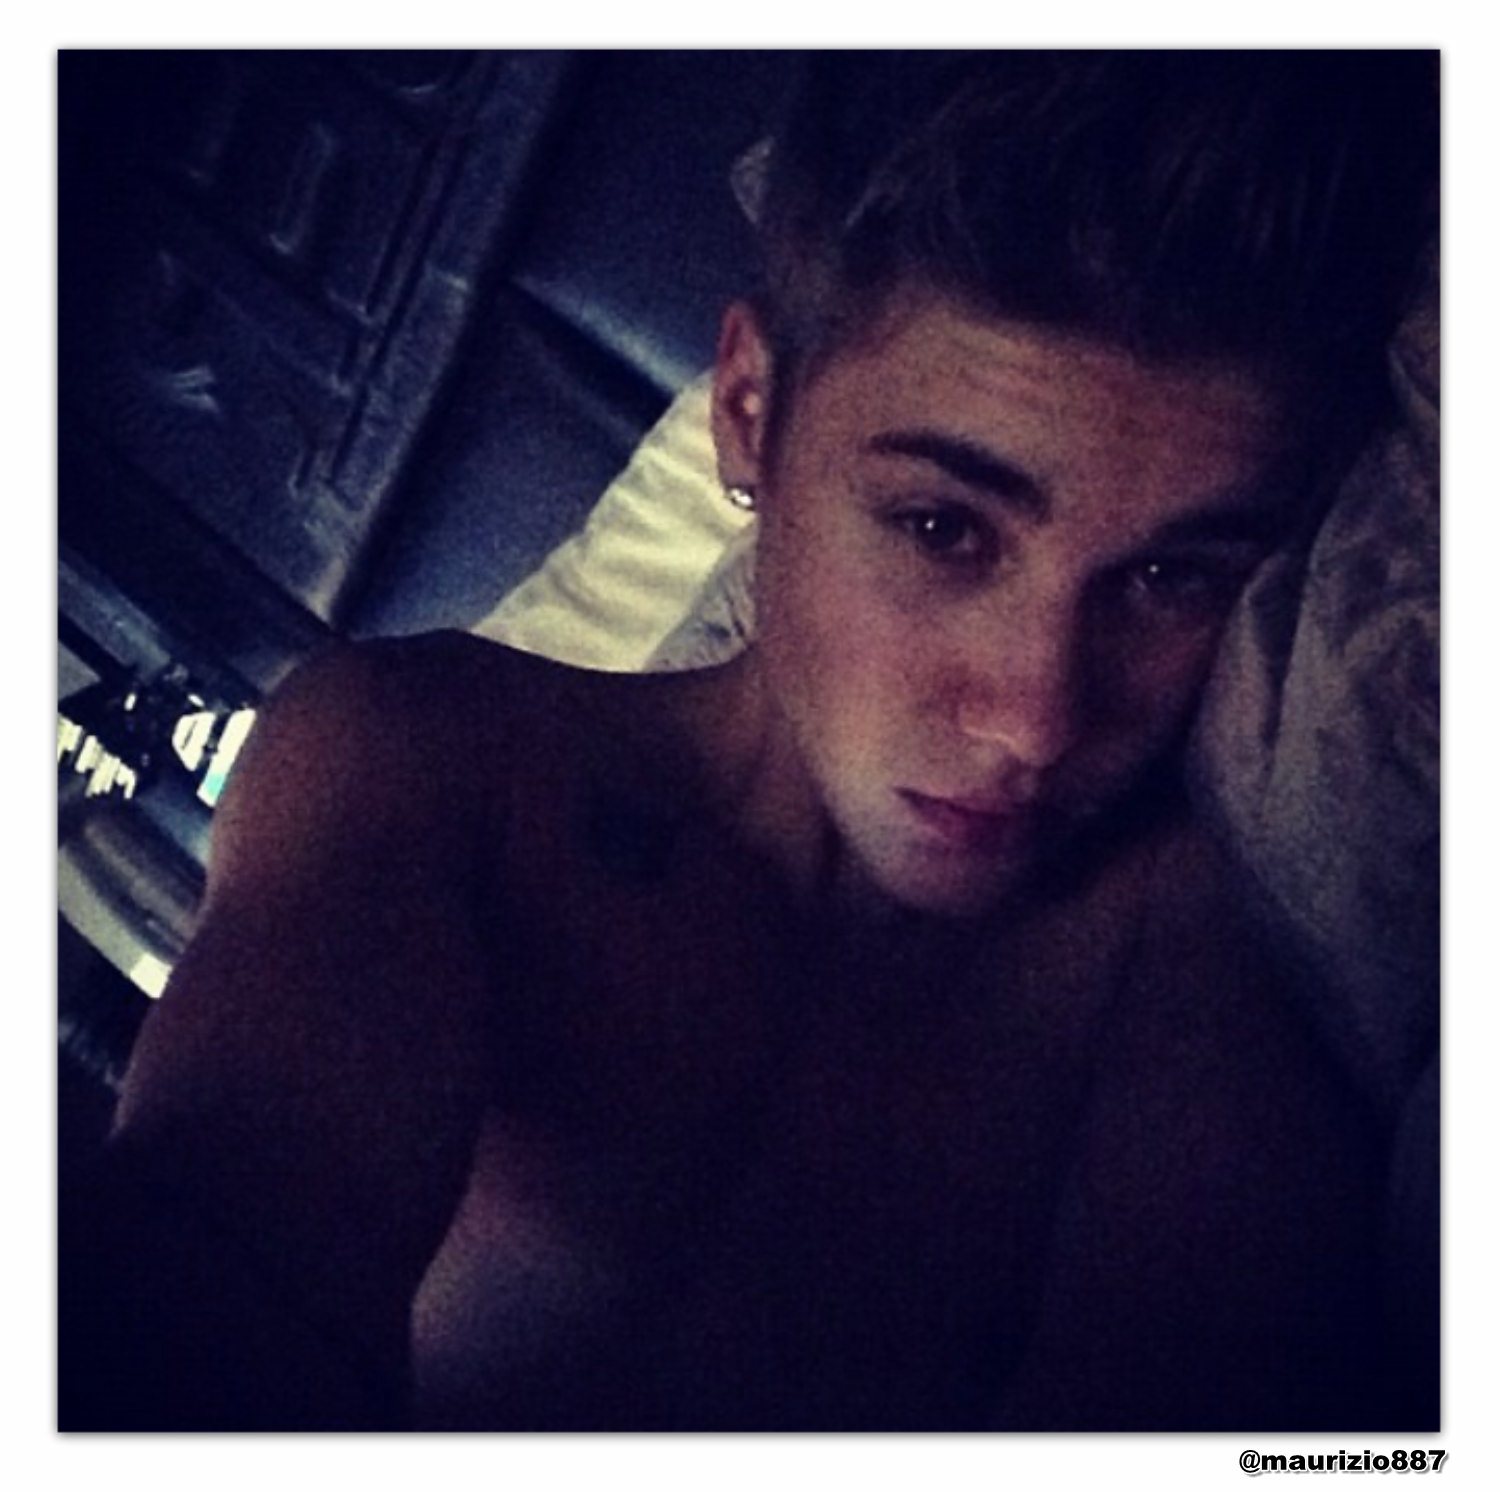 justin bieber,instagram 2012 - Justin Bieber Photo (32333048) - Fanpop1500 x 1492